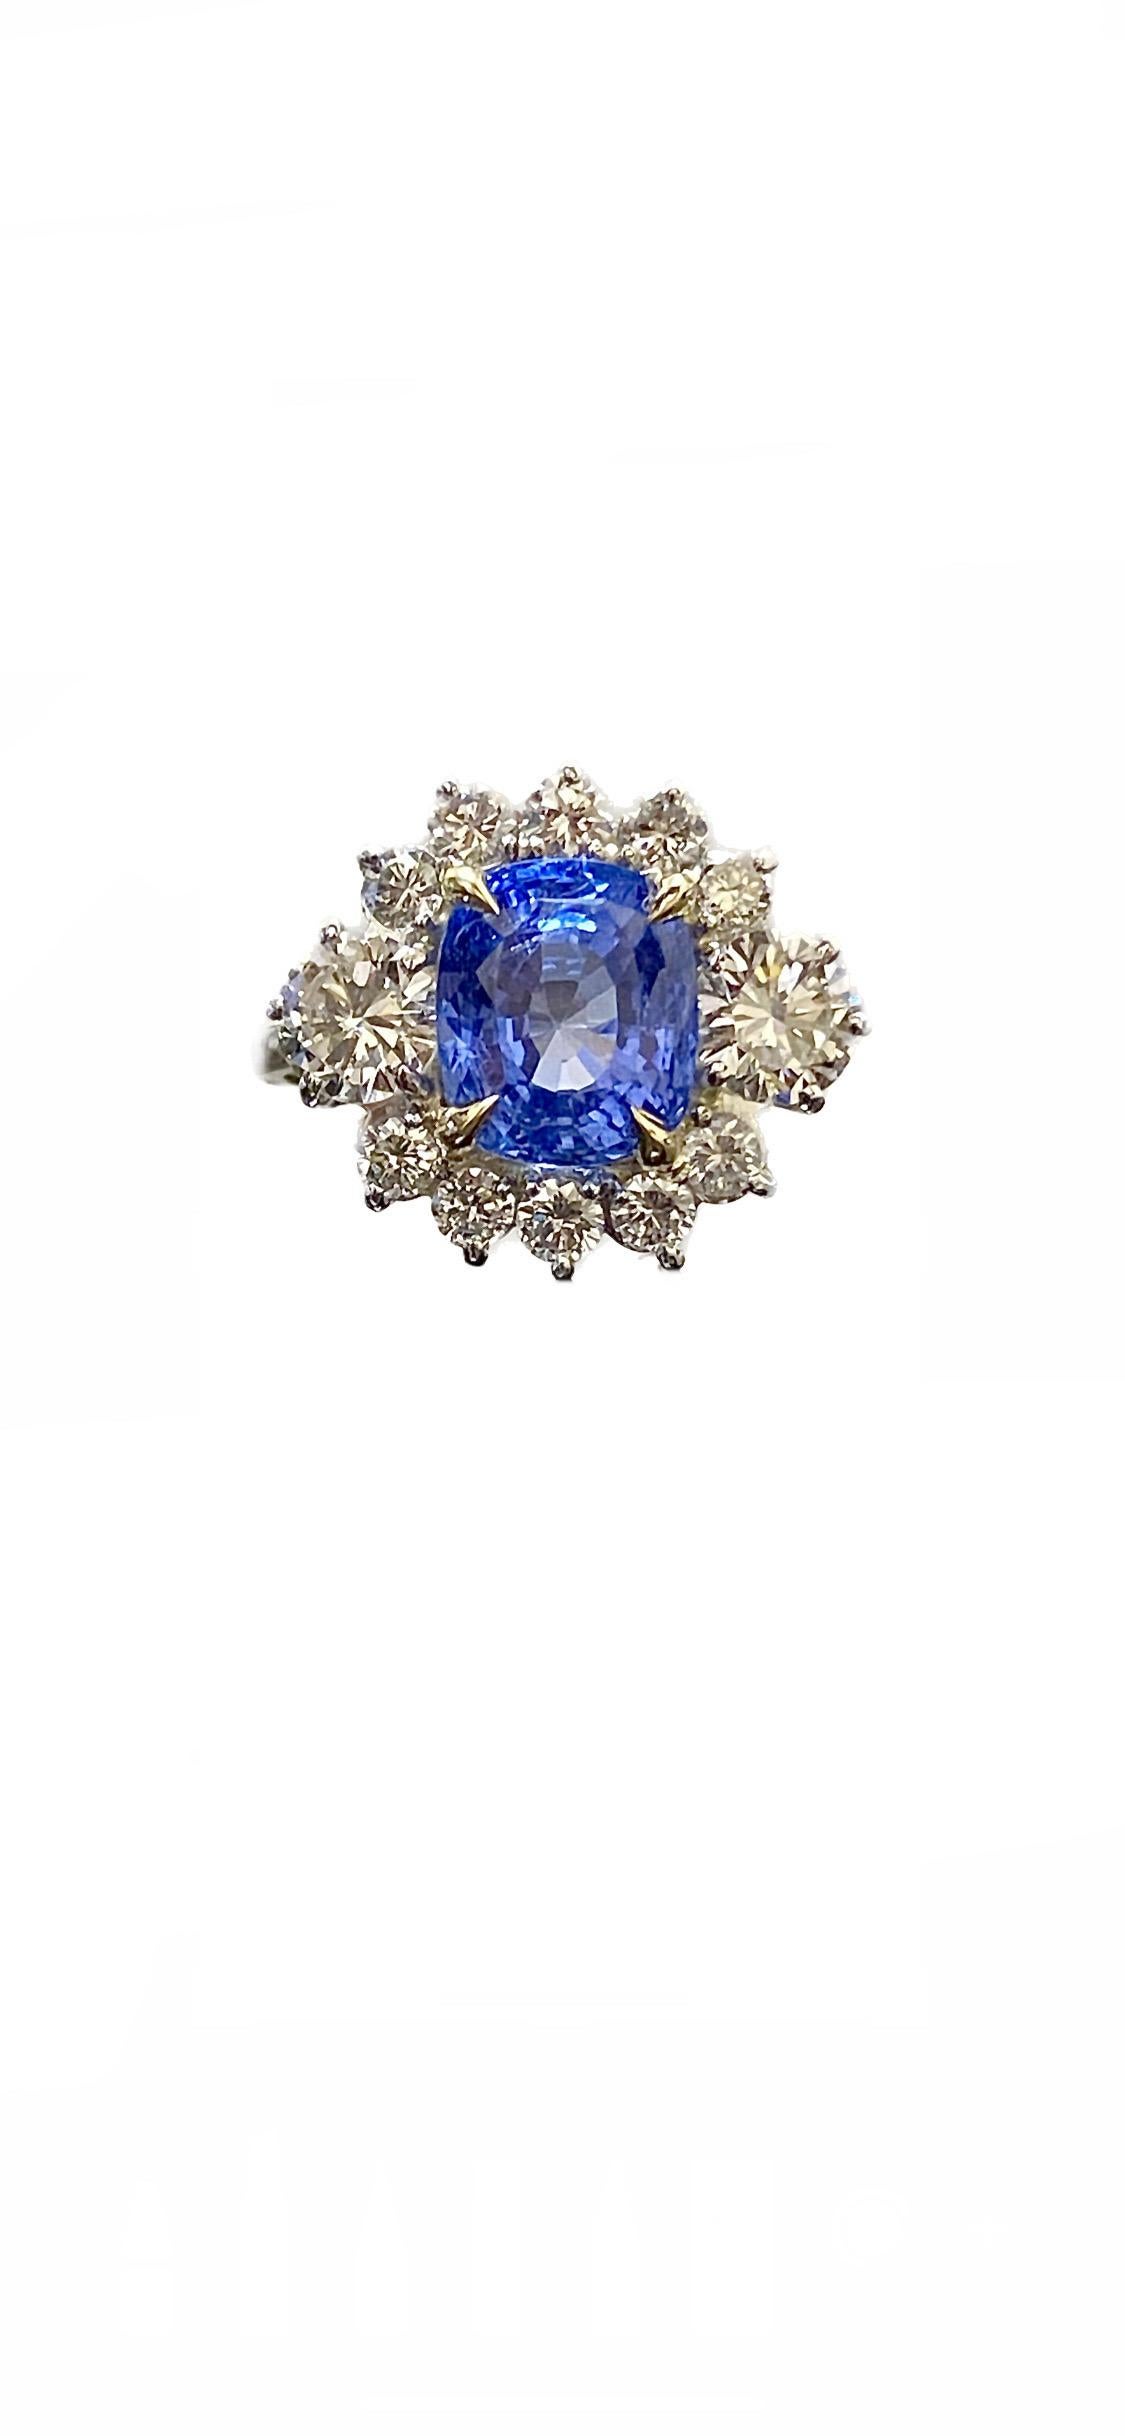 DeKara Designs Collection Masterpiece

Beautiful Modern/Art Deco Inspired Ceylon Blue Sapphire and Diamond Ring

Metal- 90% Platinum, 10% Iridium.  18K Yellow Gold, .750.

Stones- GIA Certified Cushion Cut No Heat Sri Lanka Sapphire 4.71 Carats.  12